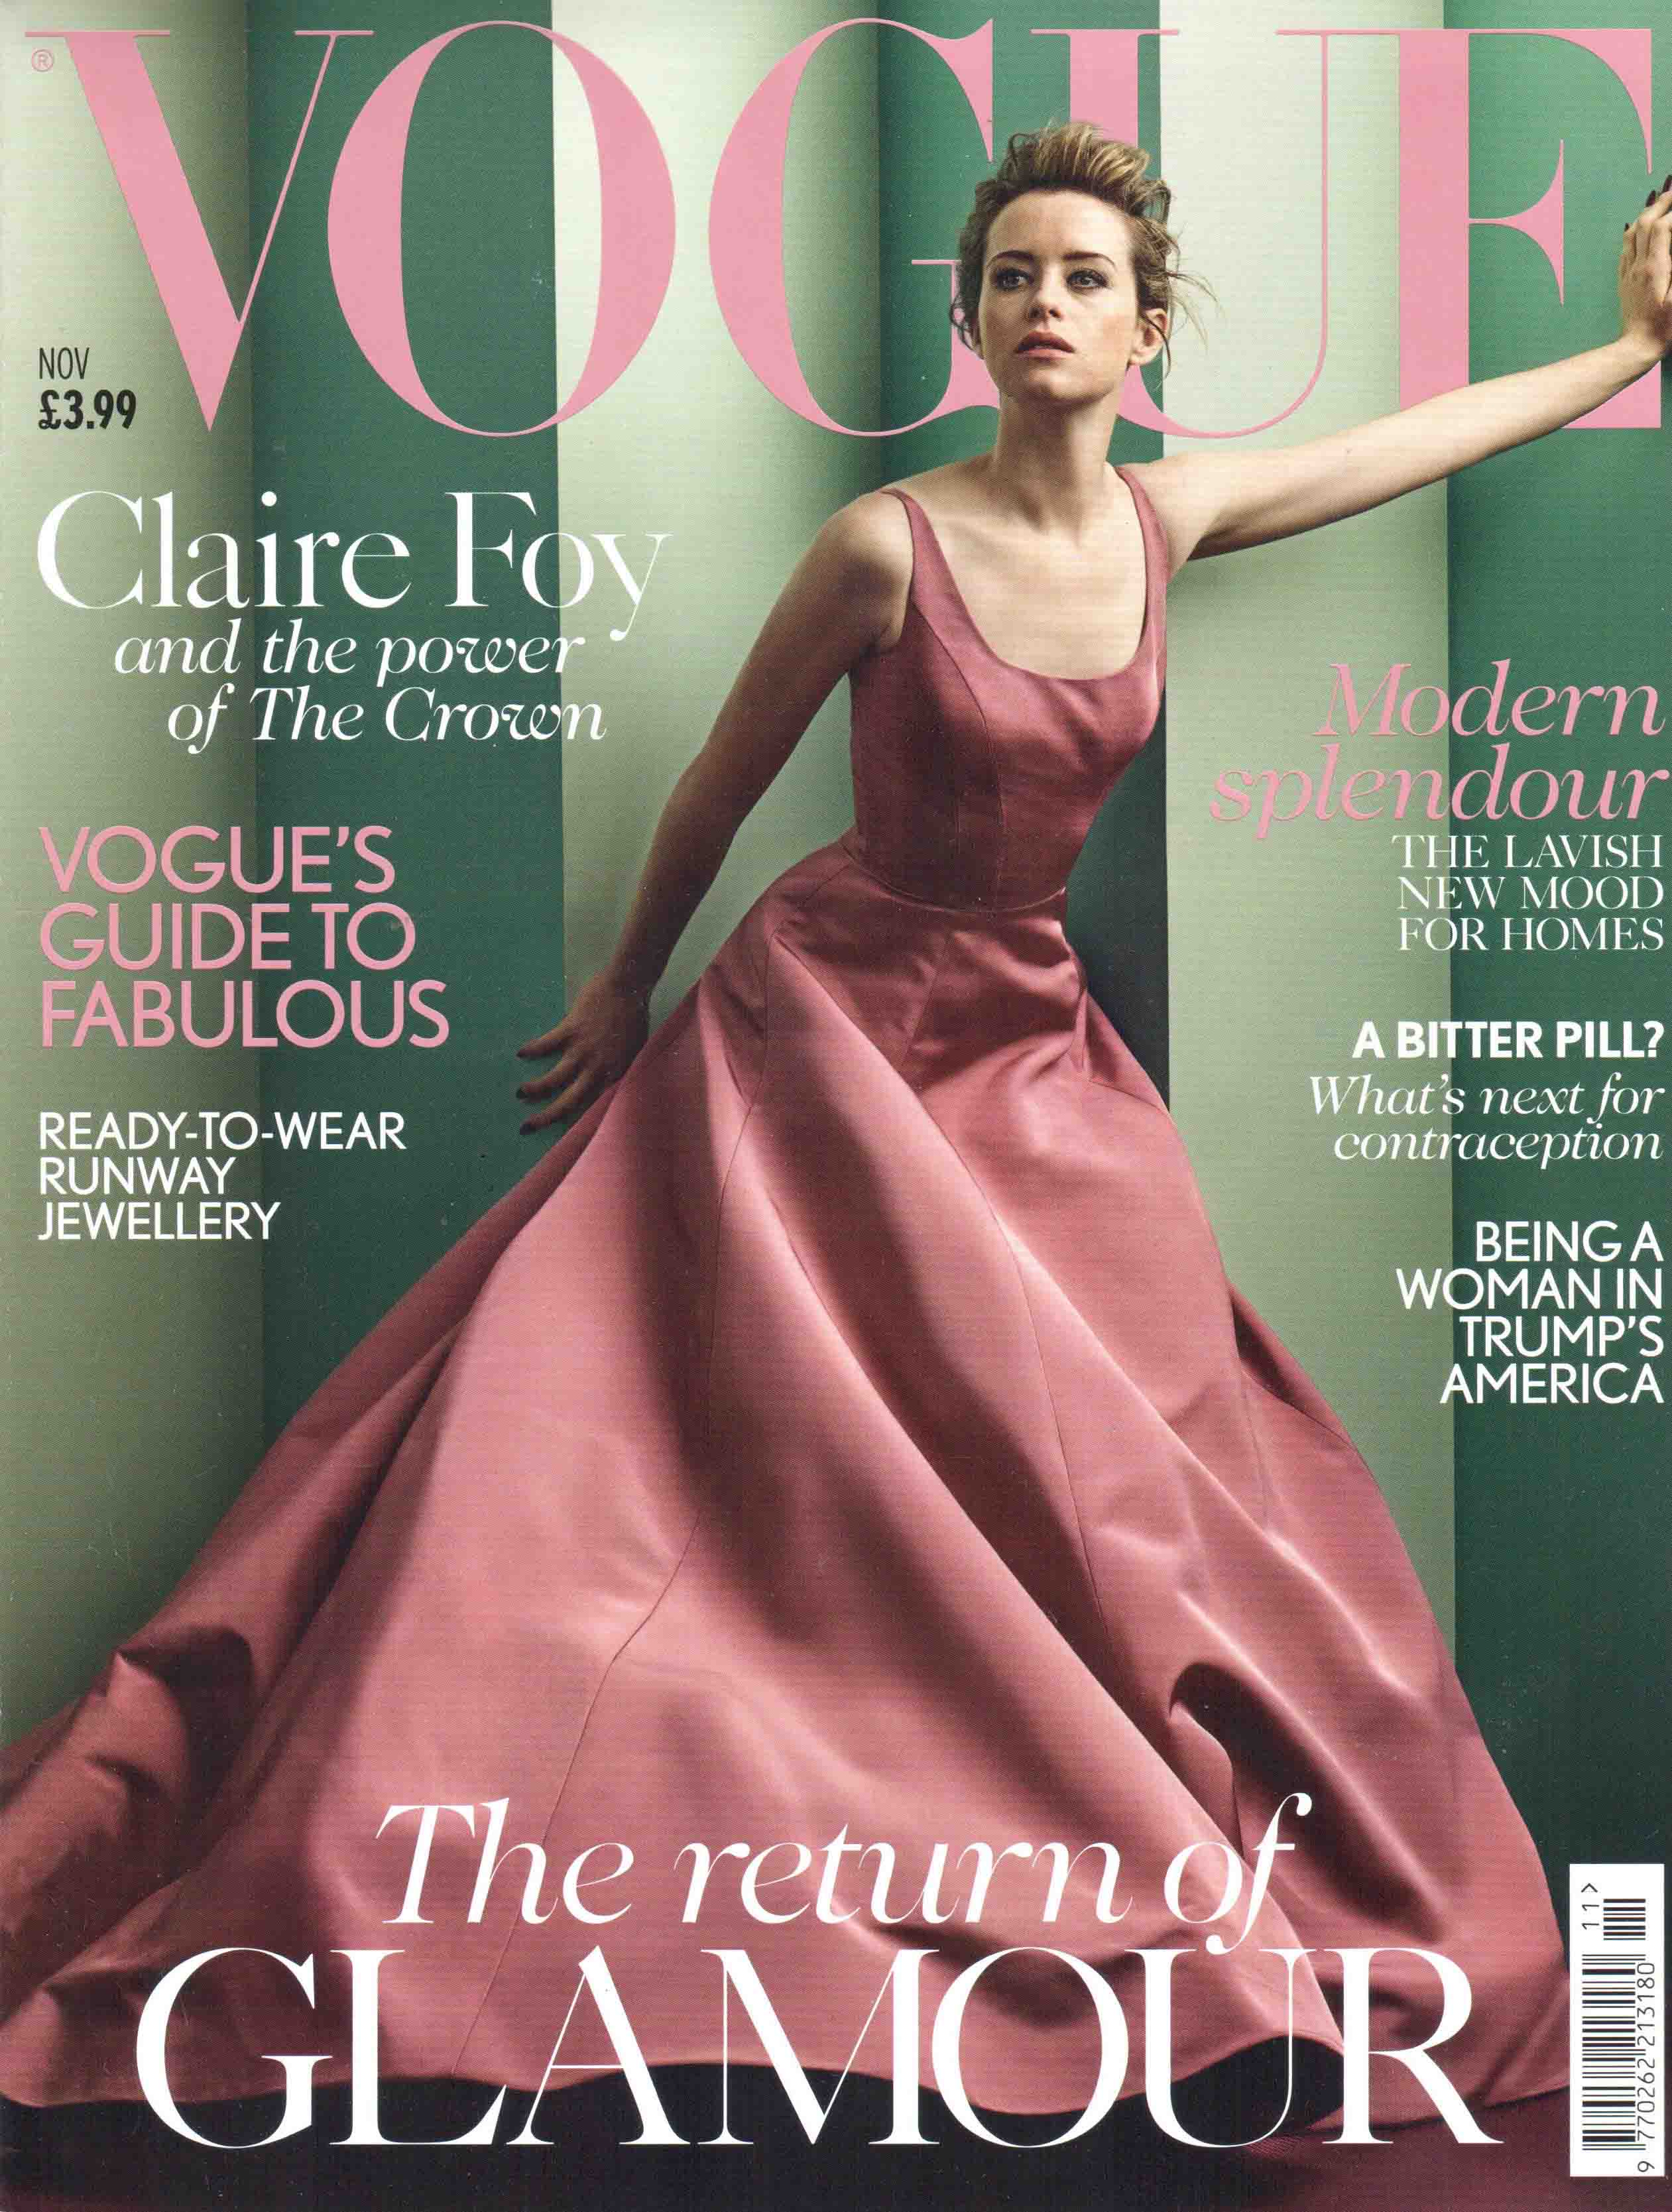 Vogue - Front Cover - November 2017 - Barneby Gates